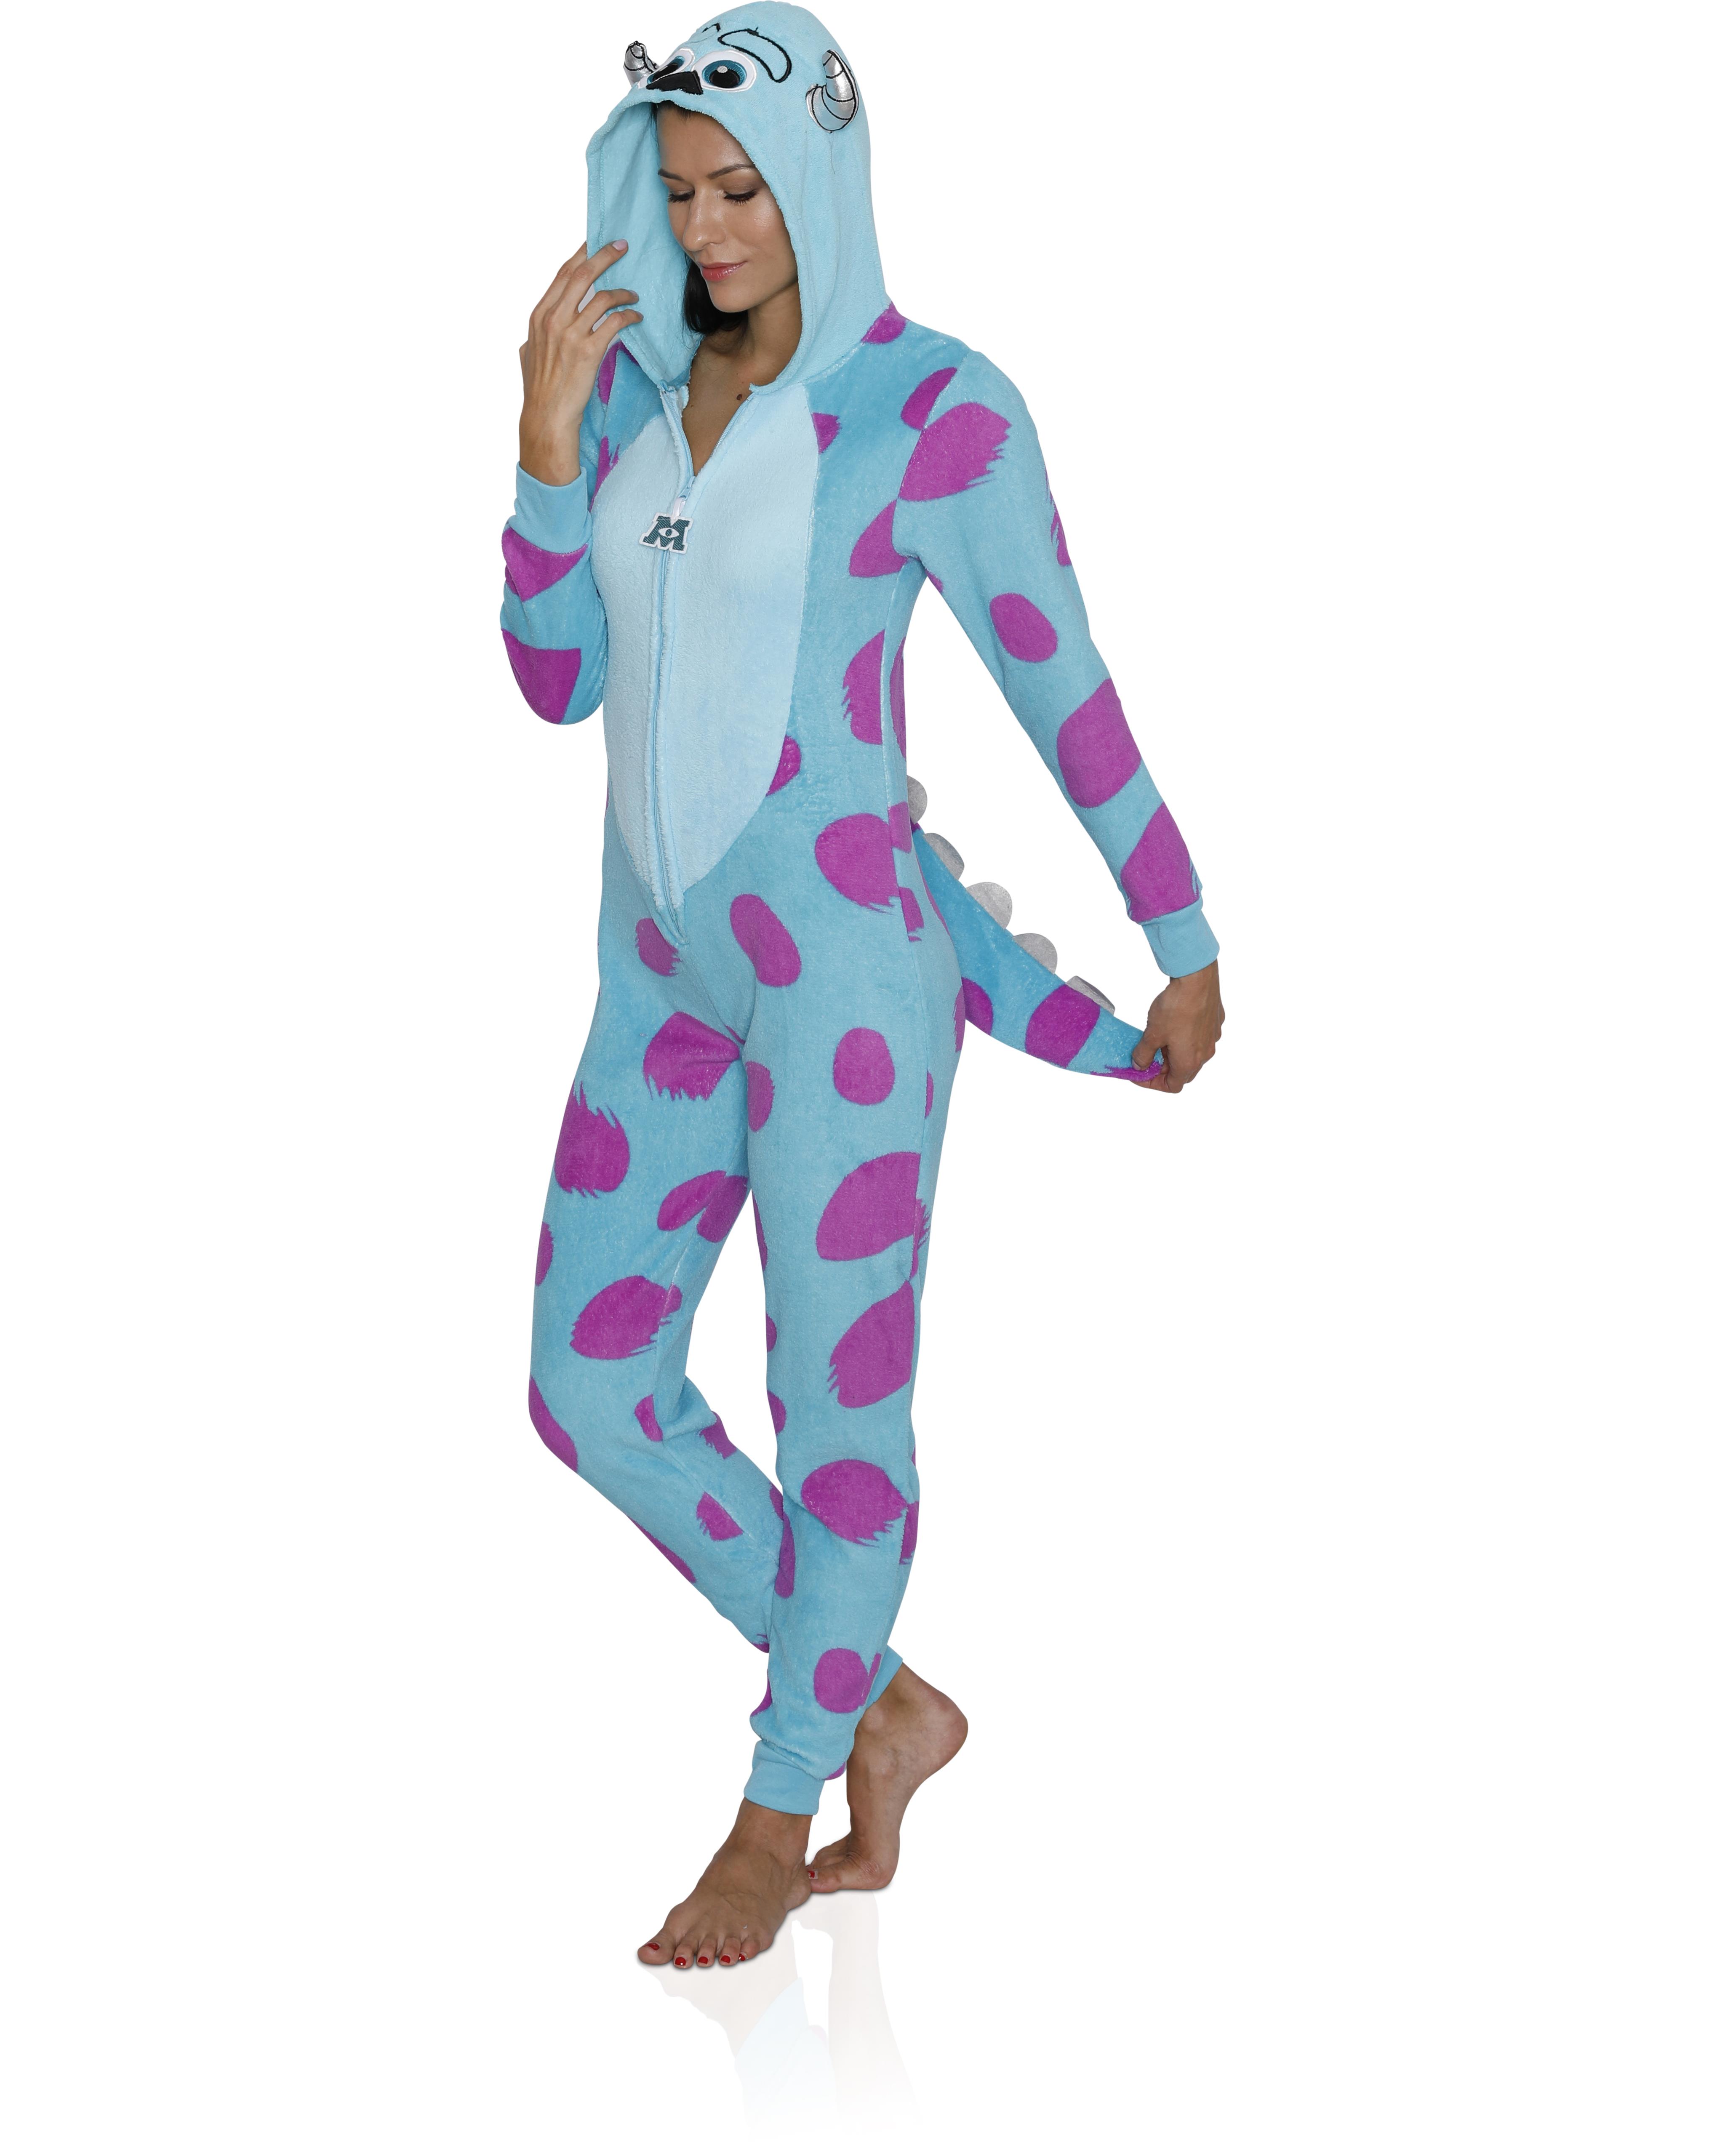 Women's Union Suit Disney Costume Onesie Plush Adult Pajama, Sulley_H, Size: Large - image 3 of 3